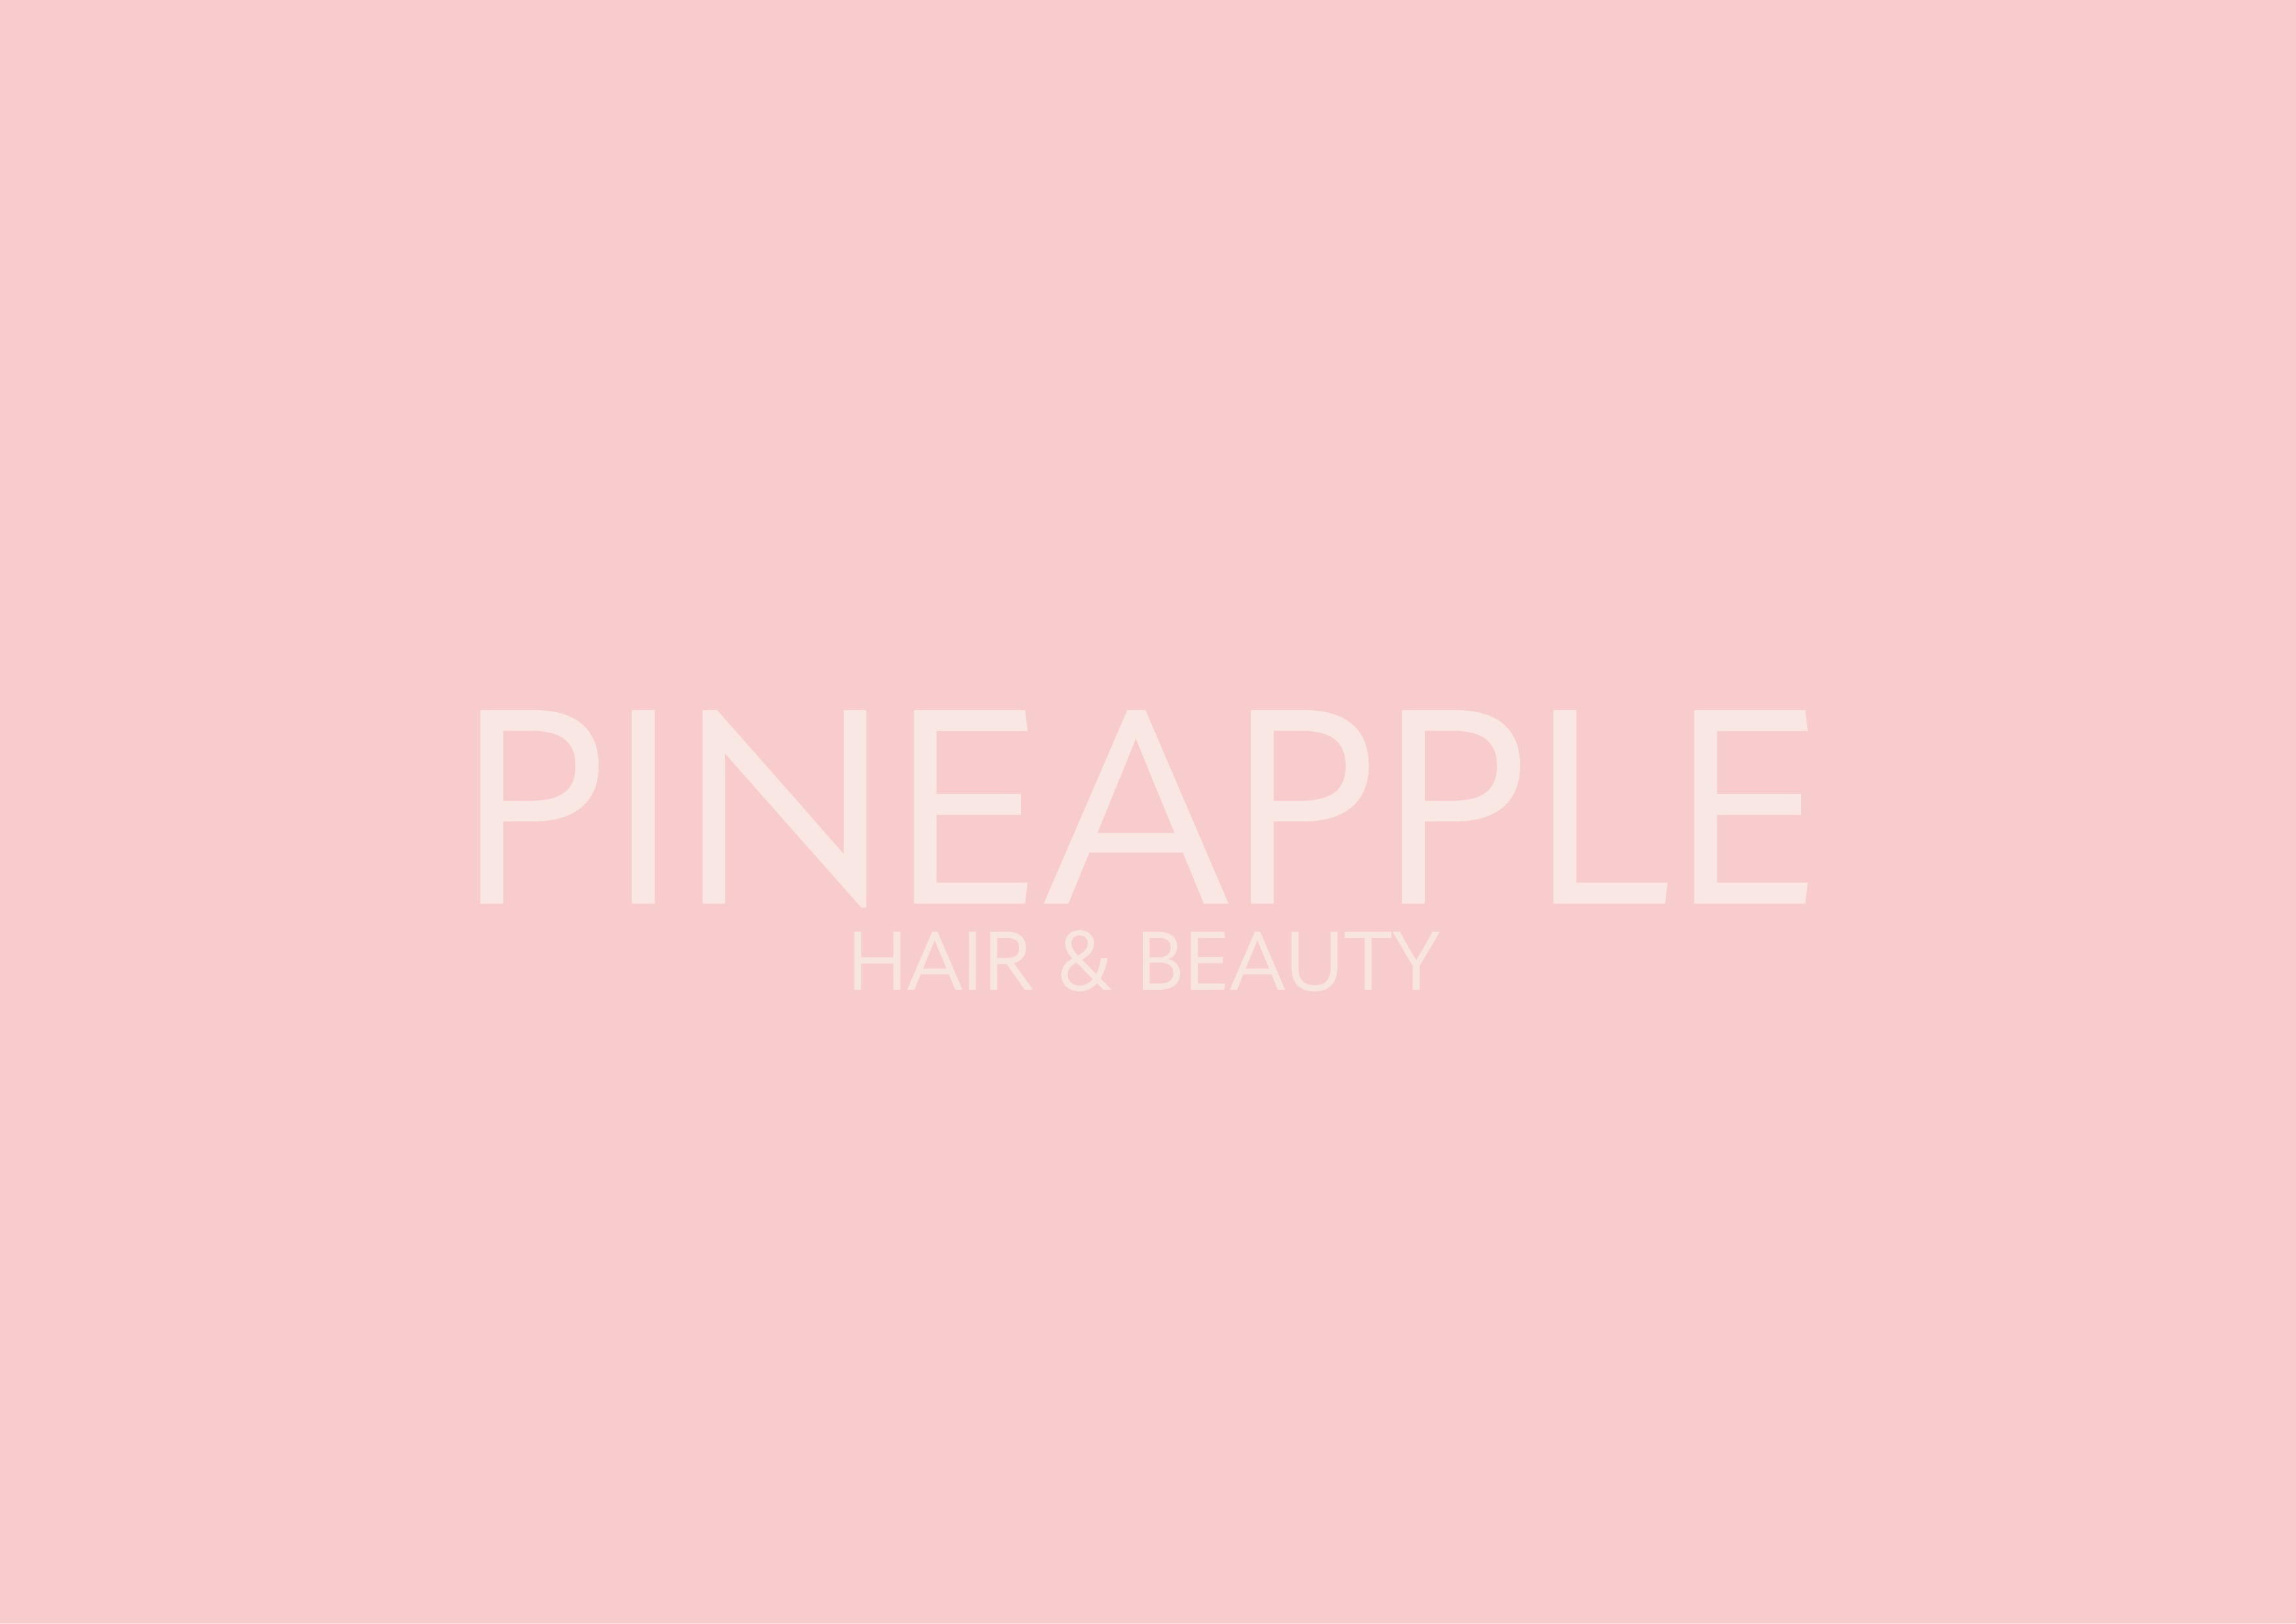 Pineapple Hair & Beauty logo